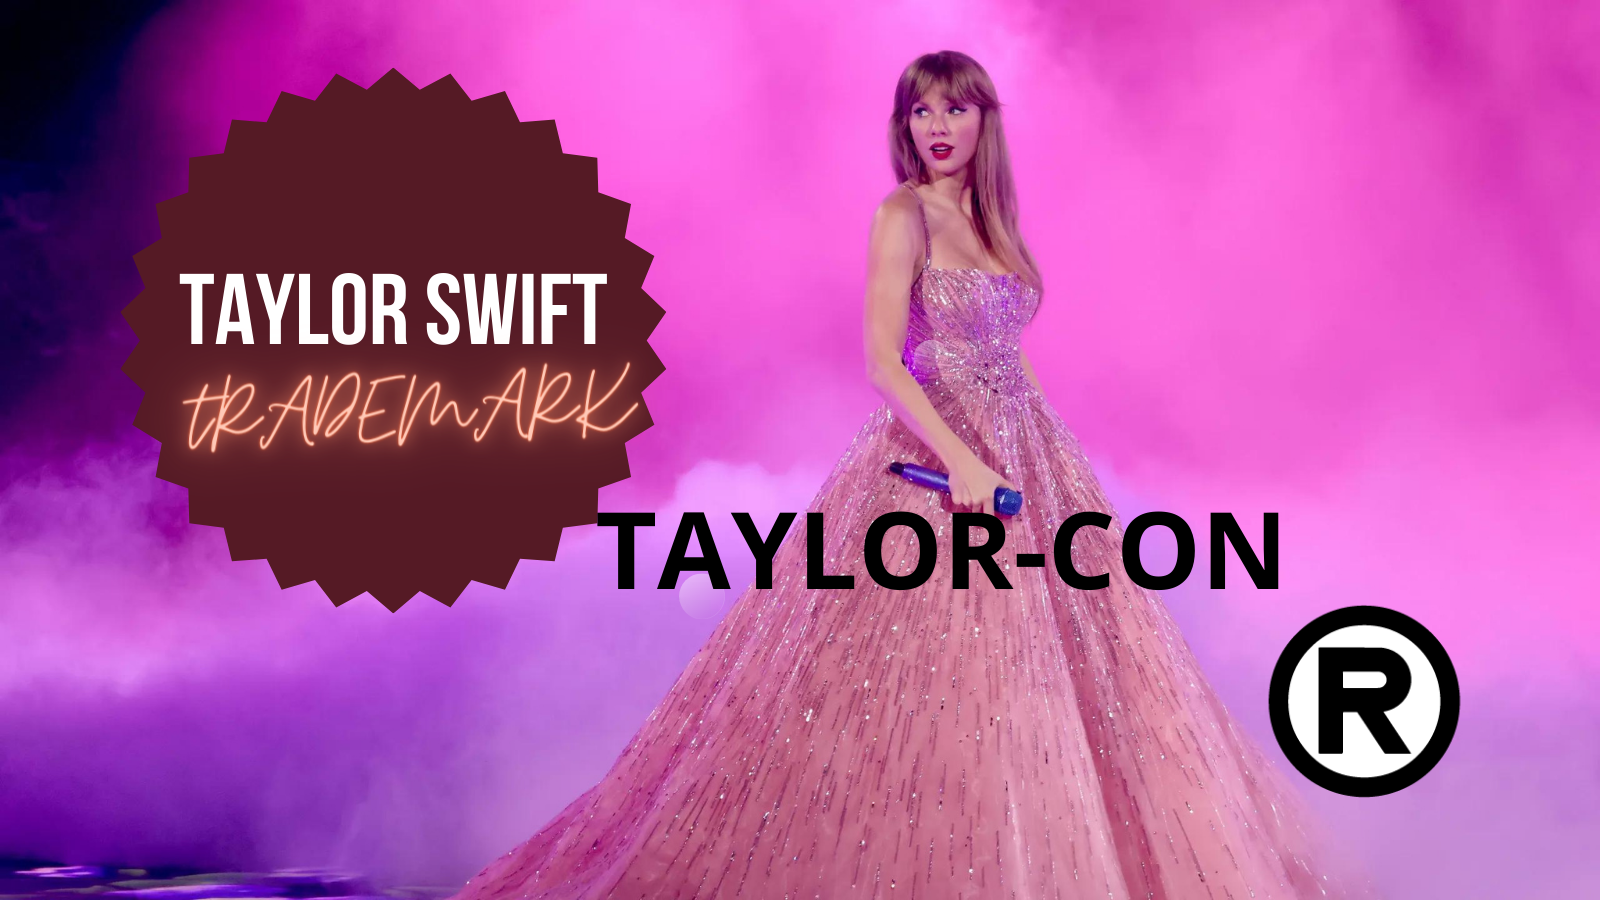 Taylor Swift: Pop Sensation Registers Trademark “TAYLOR-CON”